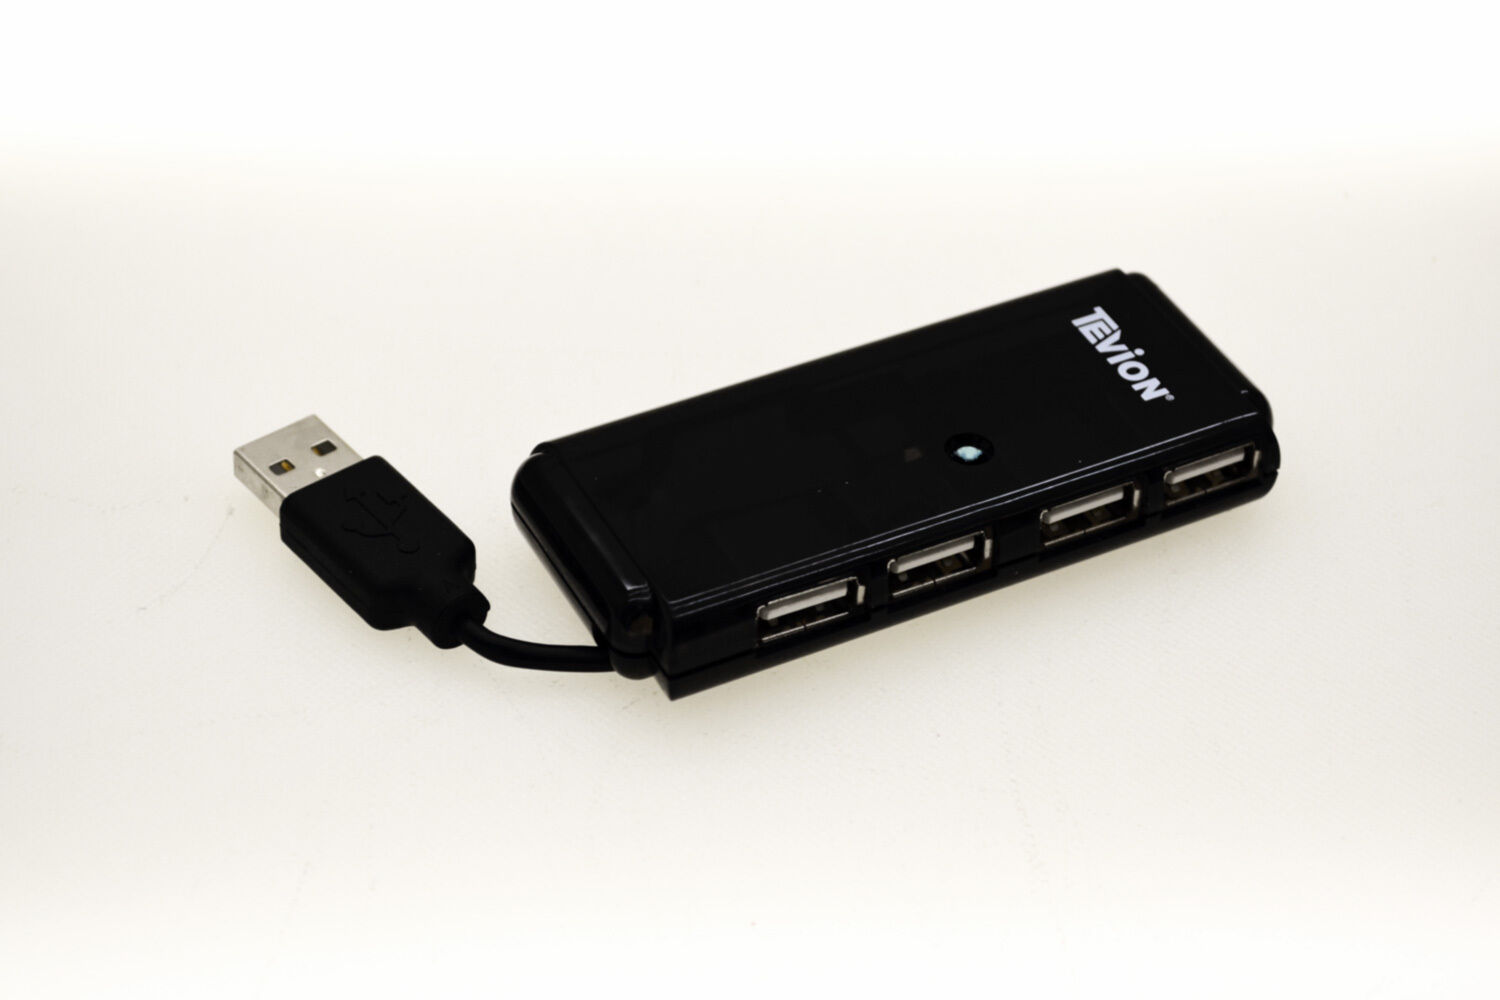 New Pocket-Size 4 Port USB 2.0 High Speed Hub 480 Mbps for PC Laptop Black LED